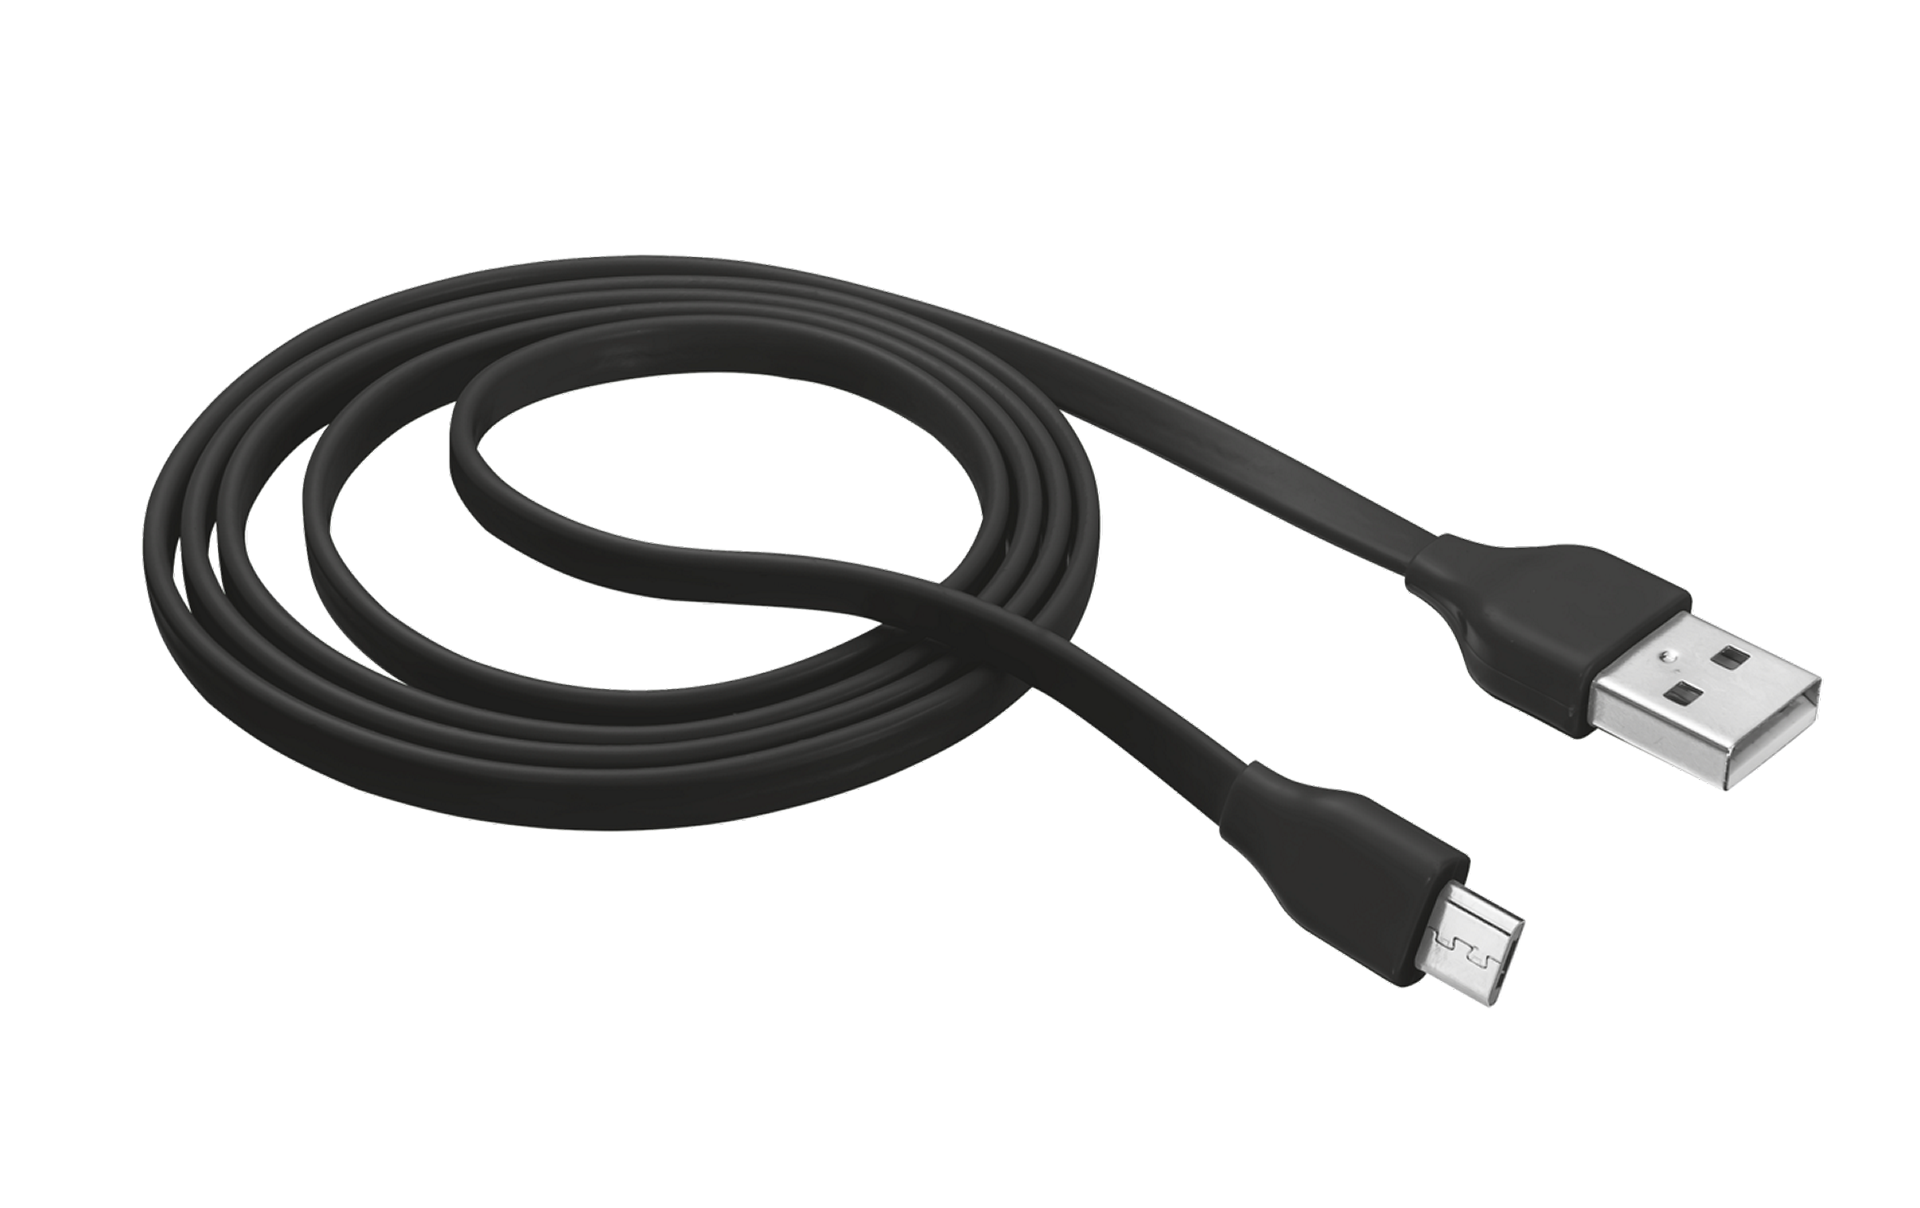 Шнур зарядки микро. Кабель USB - MICROUSB 1,8 М. Кабель Defender USB - MICROUSB (usb08-03bh) 1 м. Кабель круглый Keyron Micro USB-USB черный 1 м. Кабель Viptek USB - MICROUSB (vd02) 1.5 м.